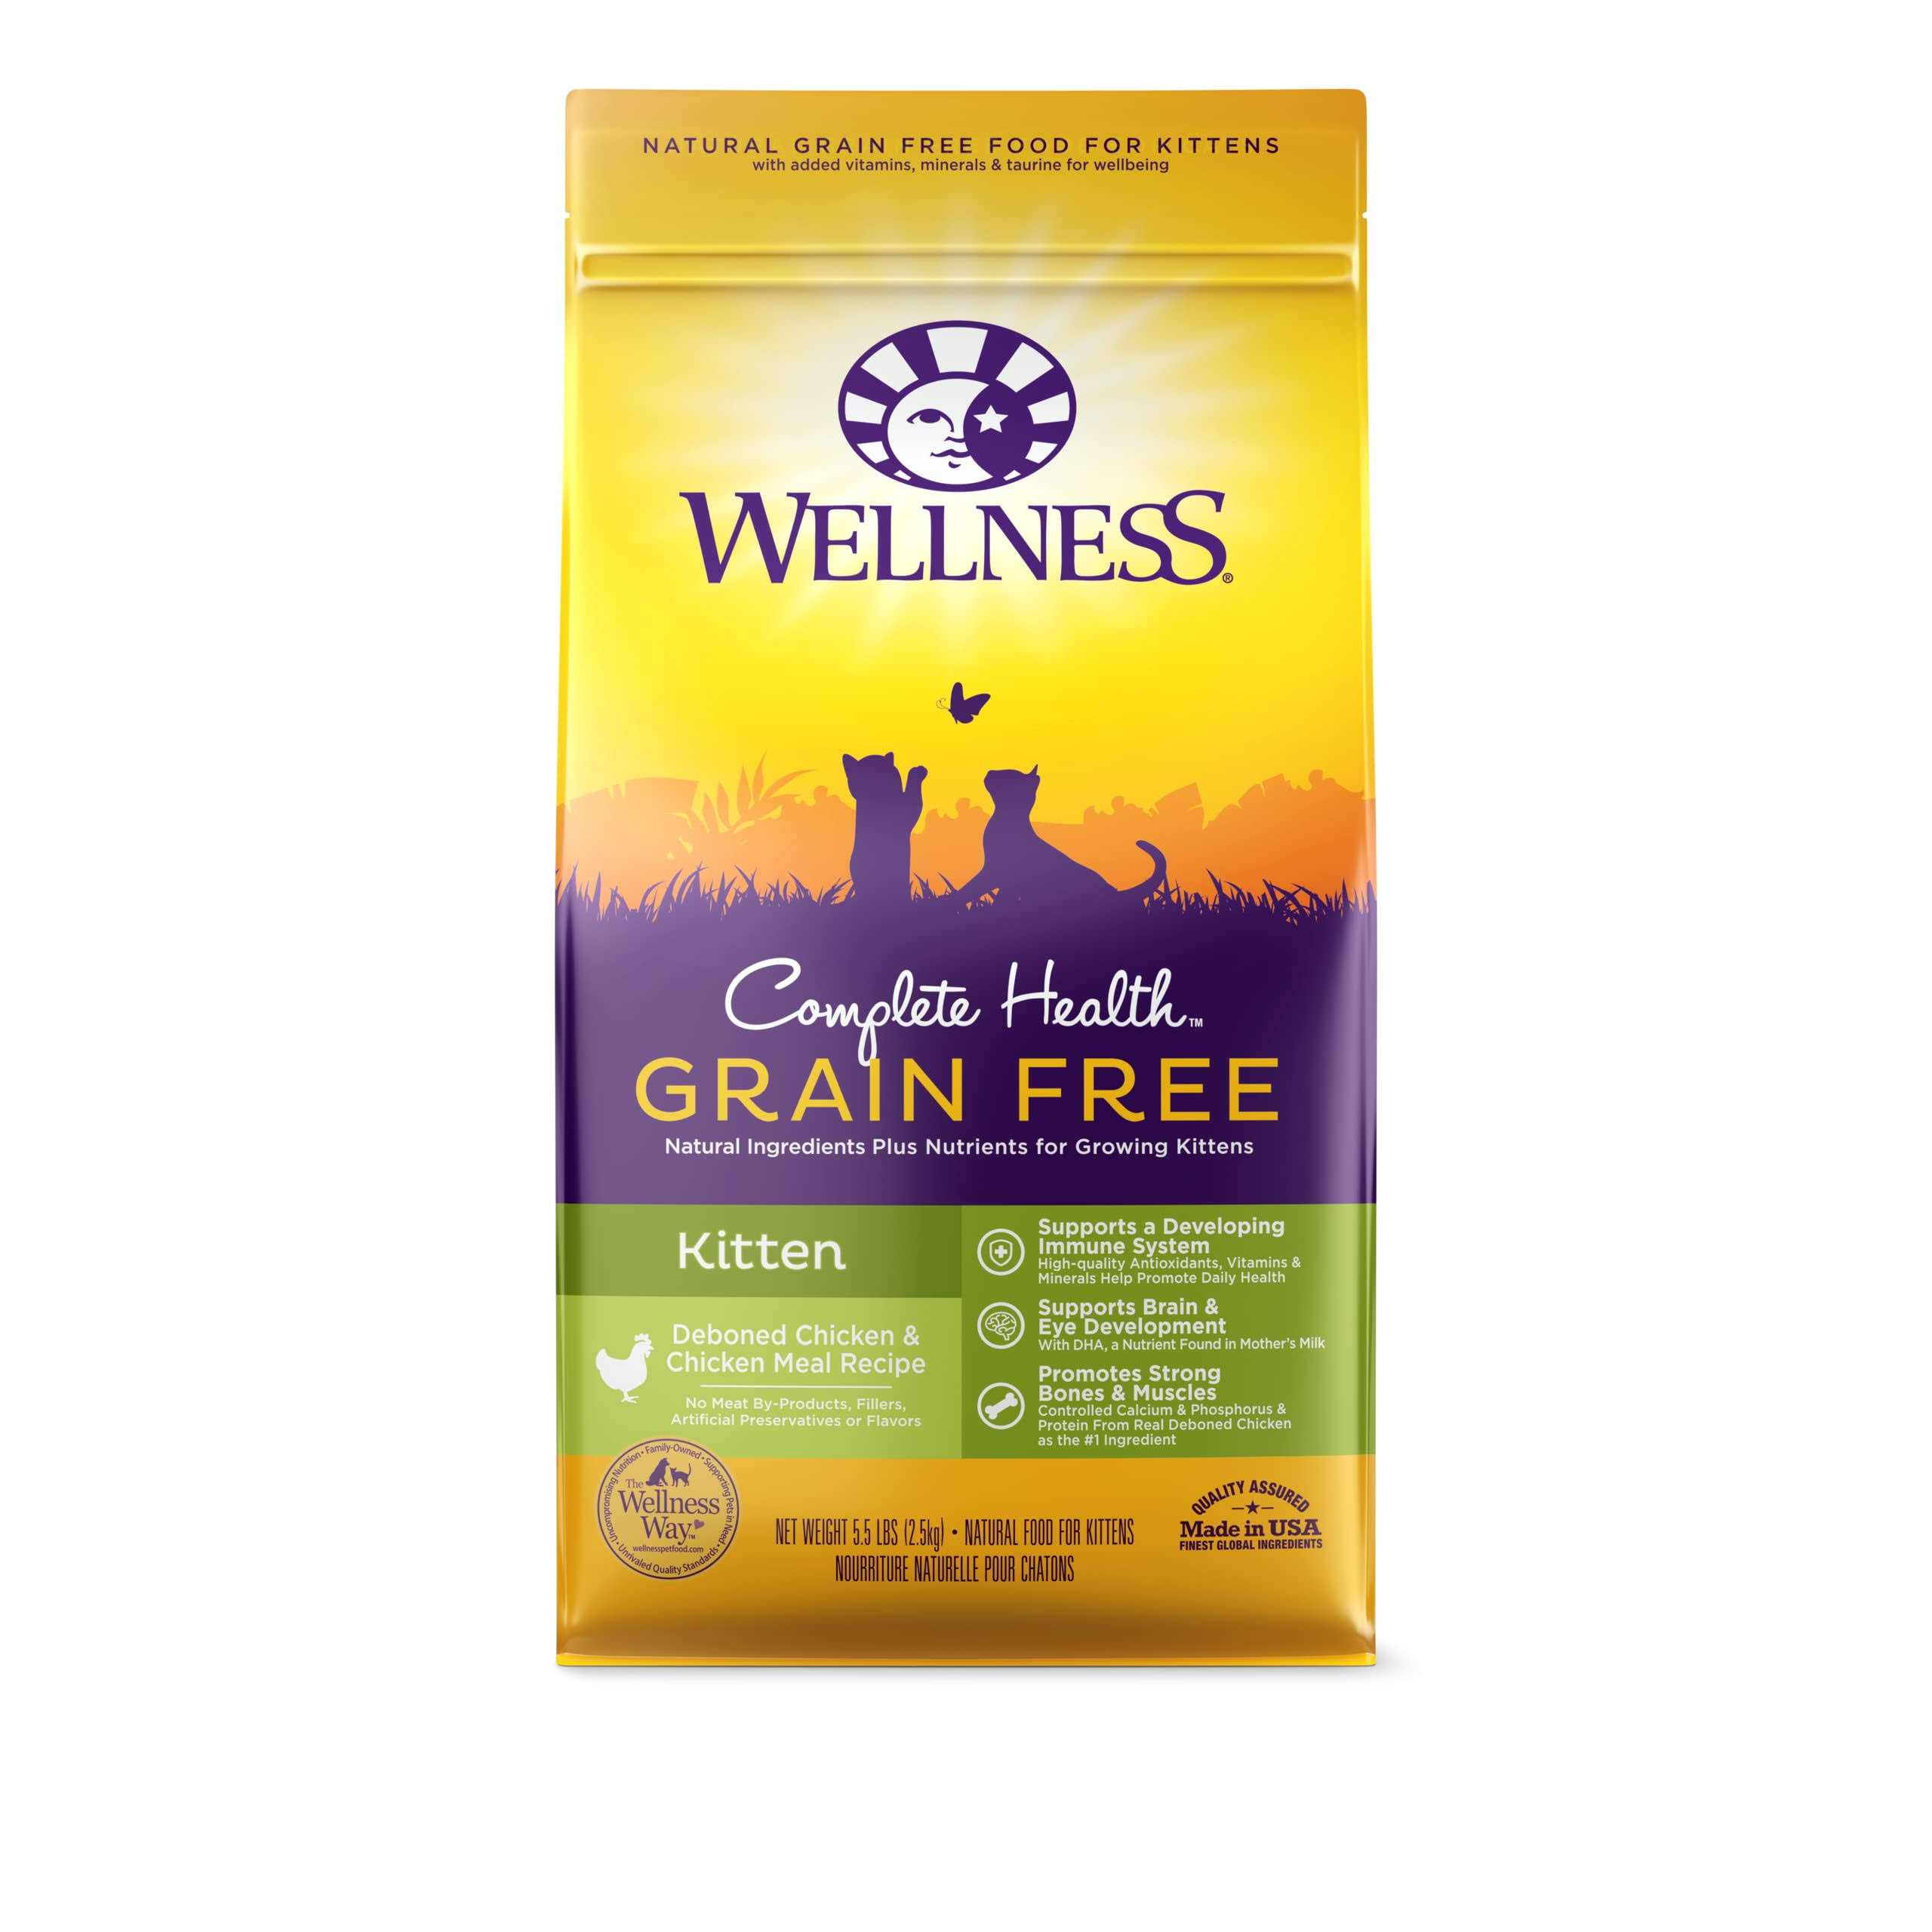 Wellness Complete Health Grain-Free Dry Kitten Food - Deboned Chicken & Chicken Meal, 5.5lb